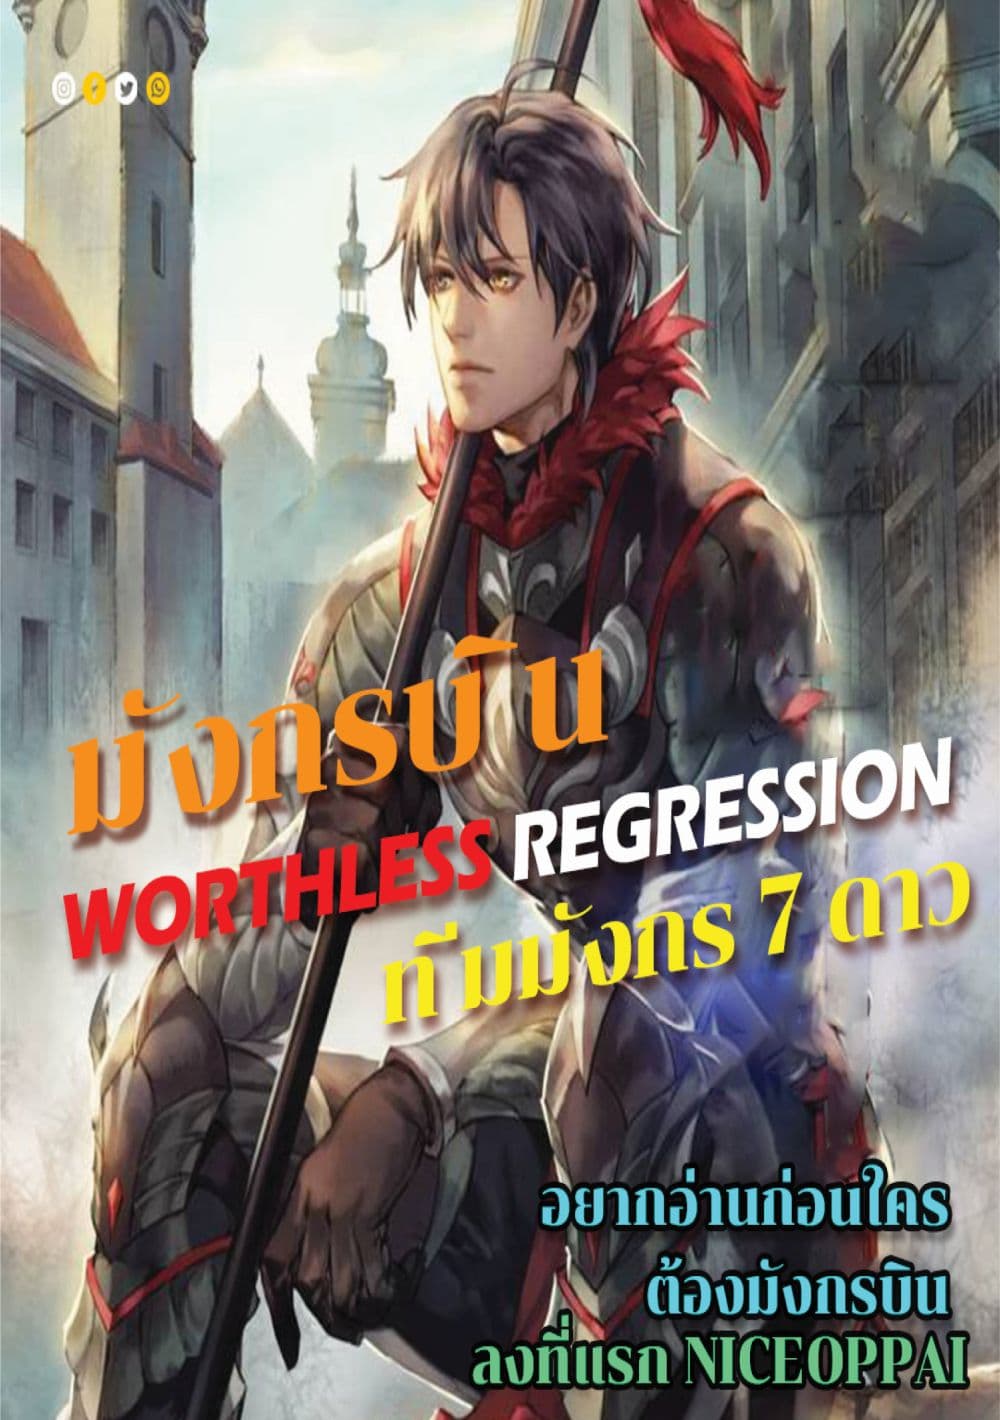 Worthless Regression 13 67